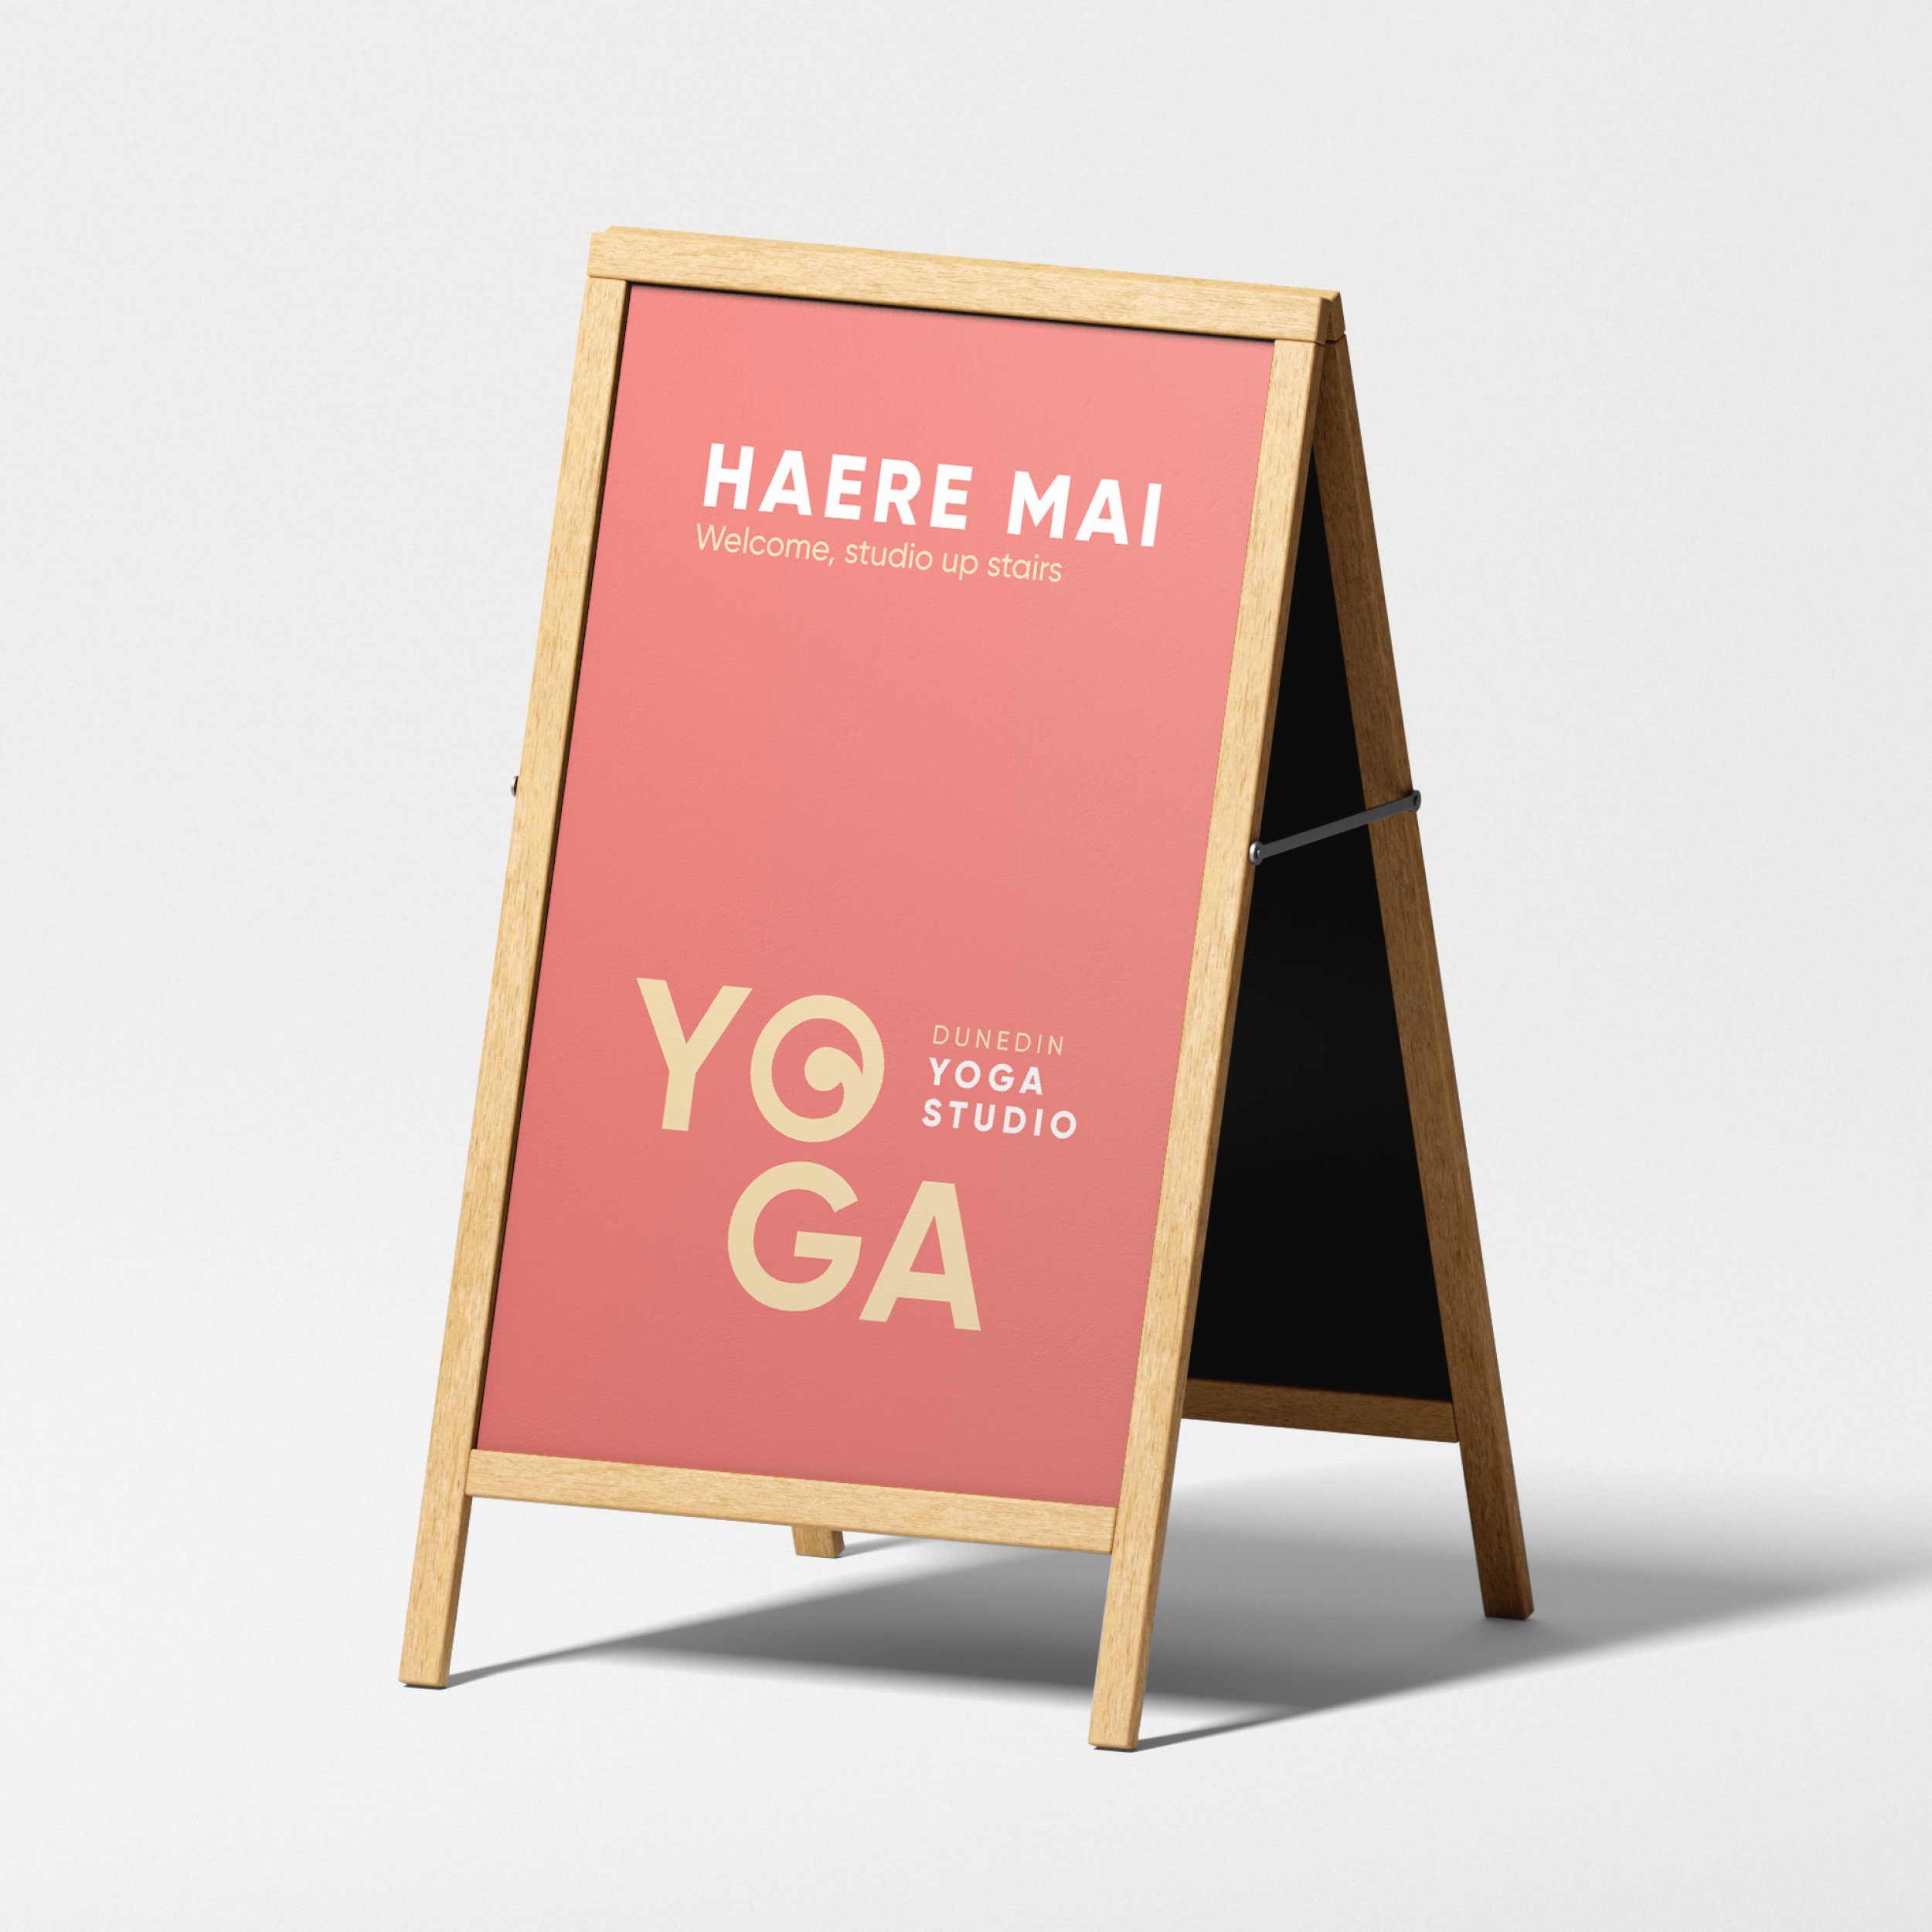 Dunedin Yoga Studio - Social (brand presentation) 7.jpg